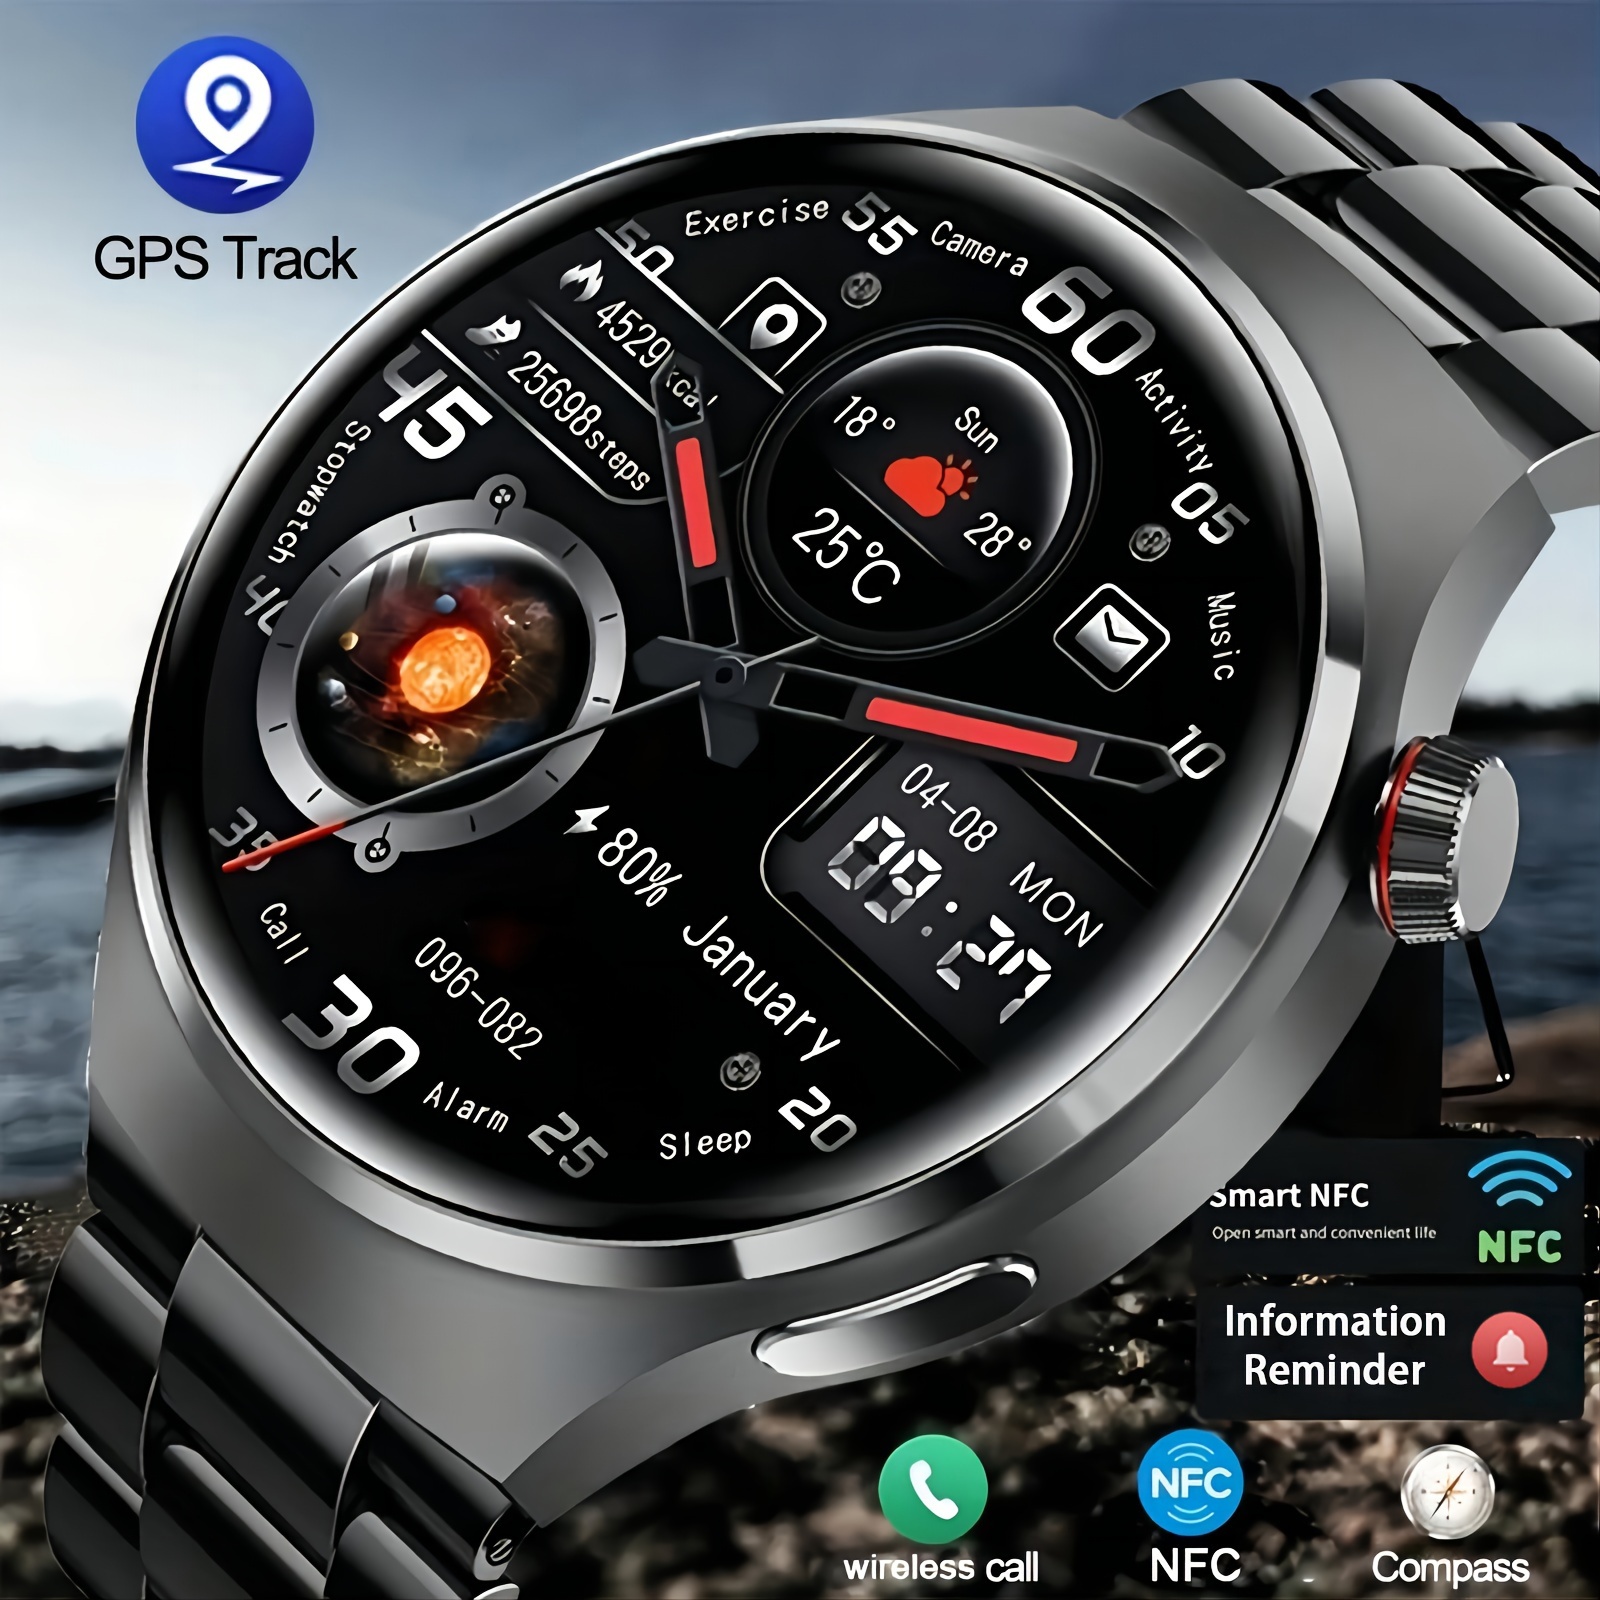 LEMFO relojes inteligentes smartwatch 1.43 inch 466*466 AMOLED HD relogio  inteligente smart watch batería